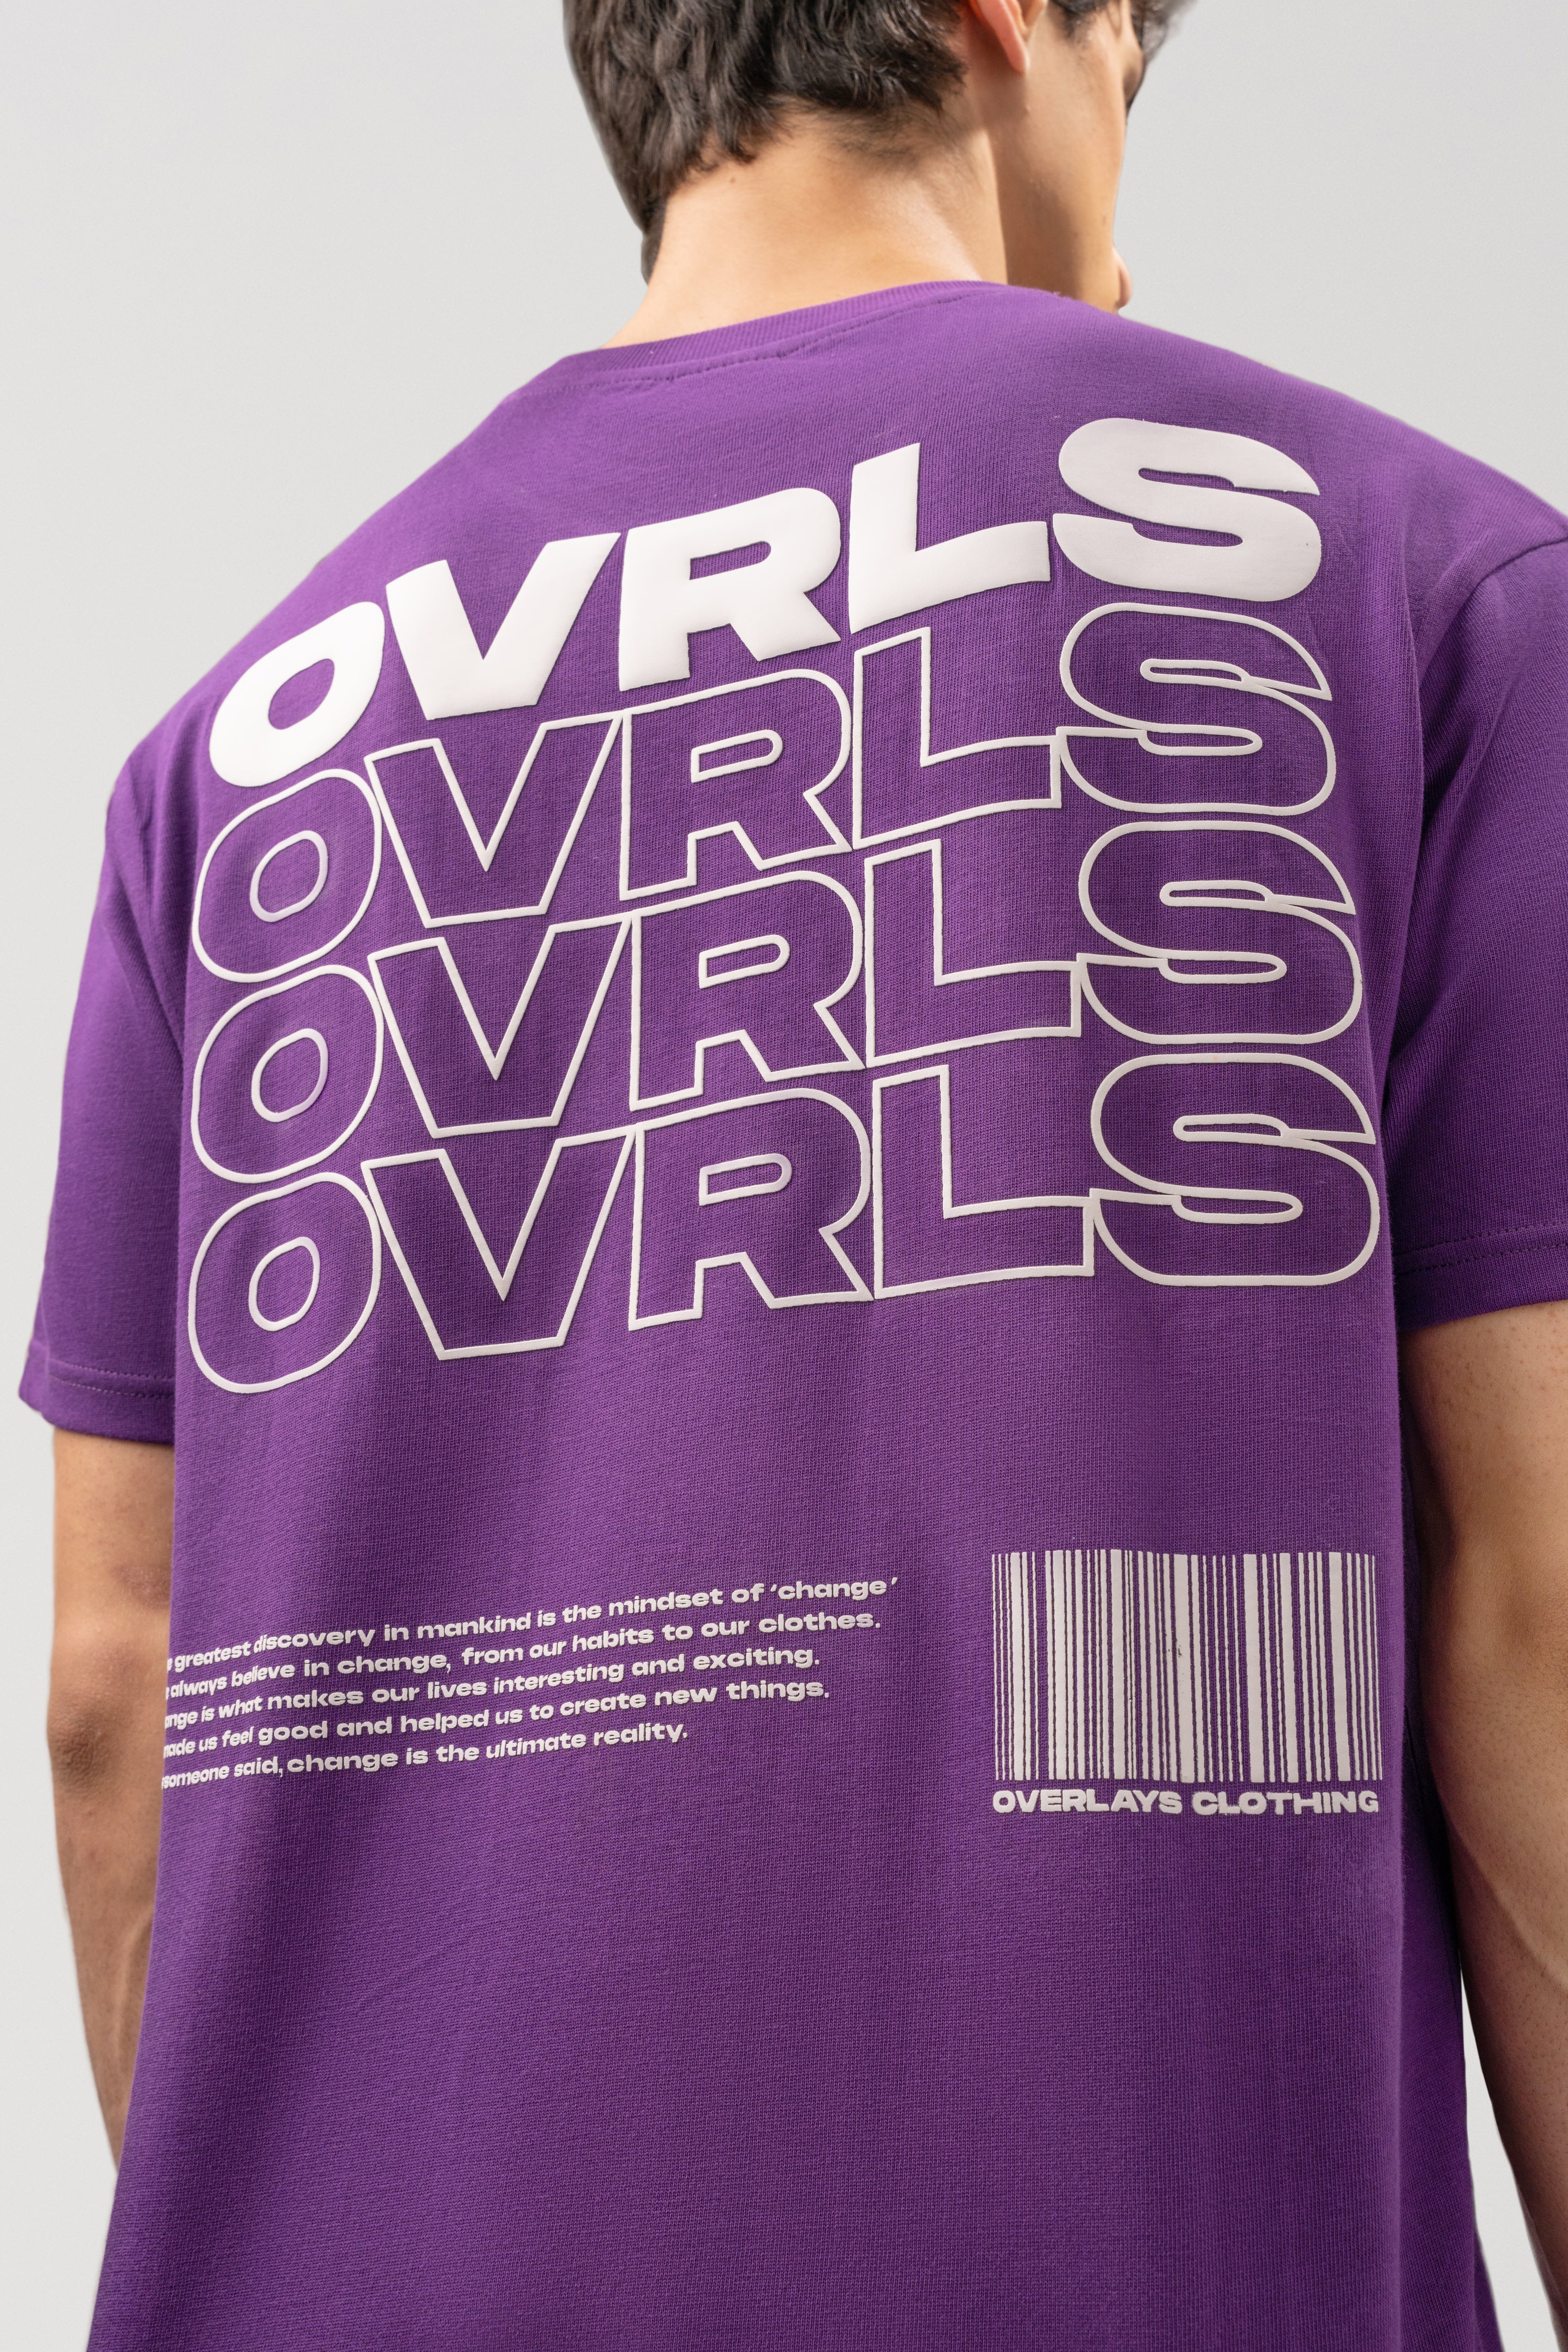 Textured Oversized OVRLS  T-shirt